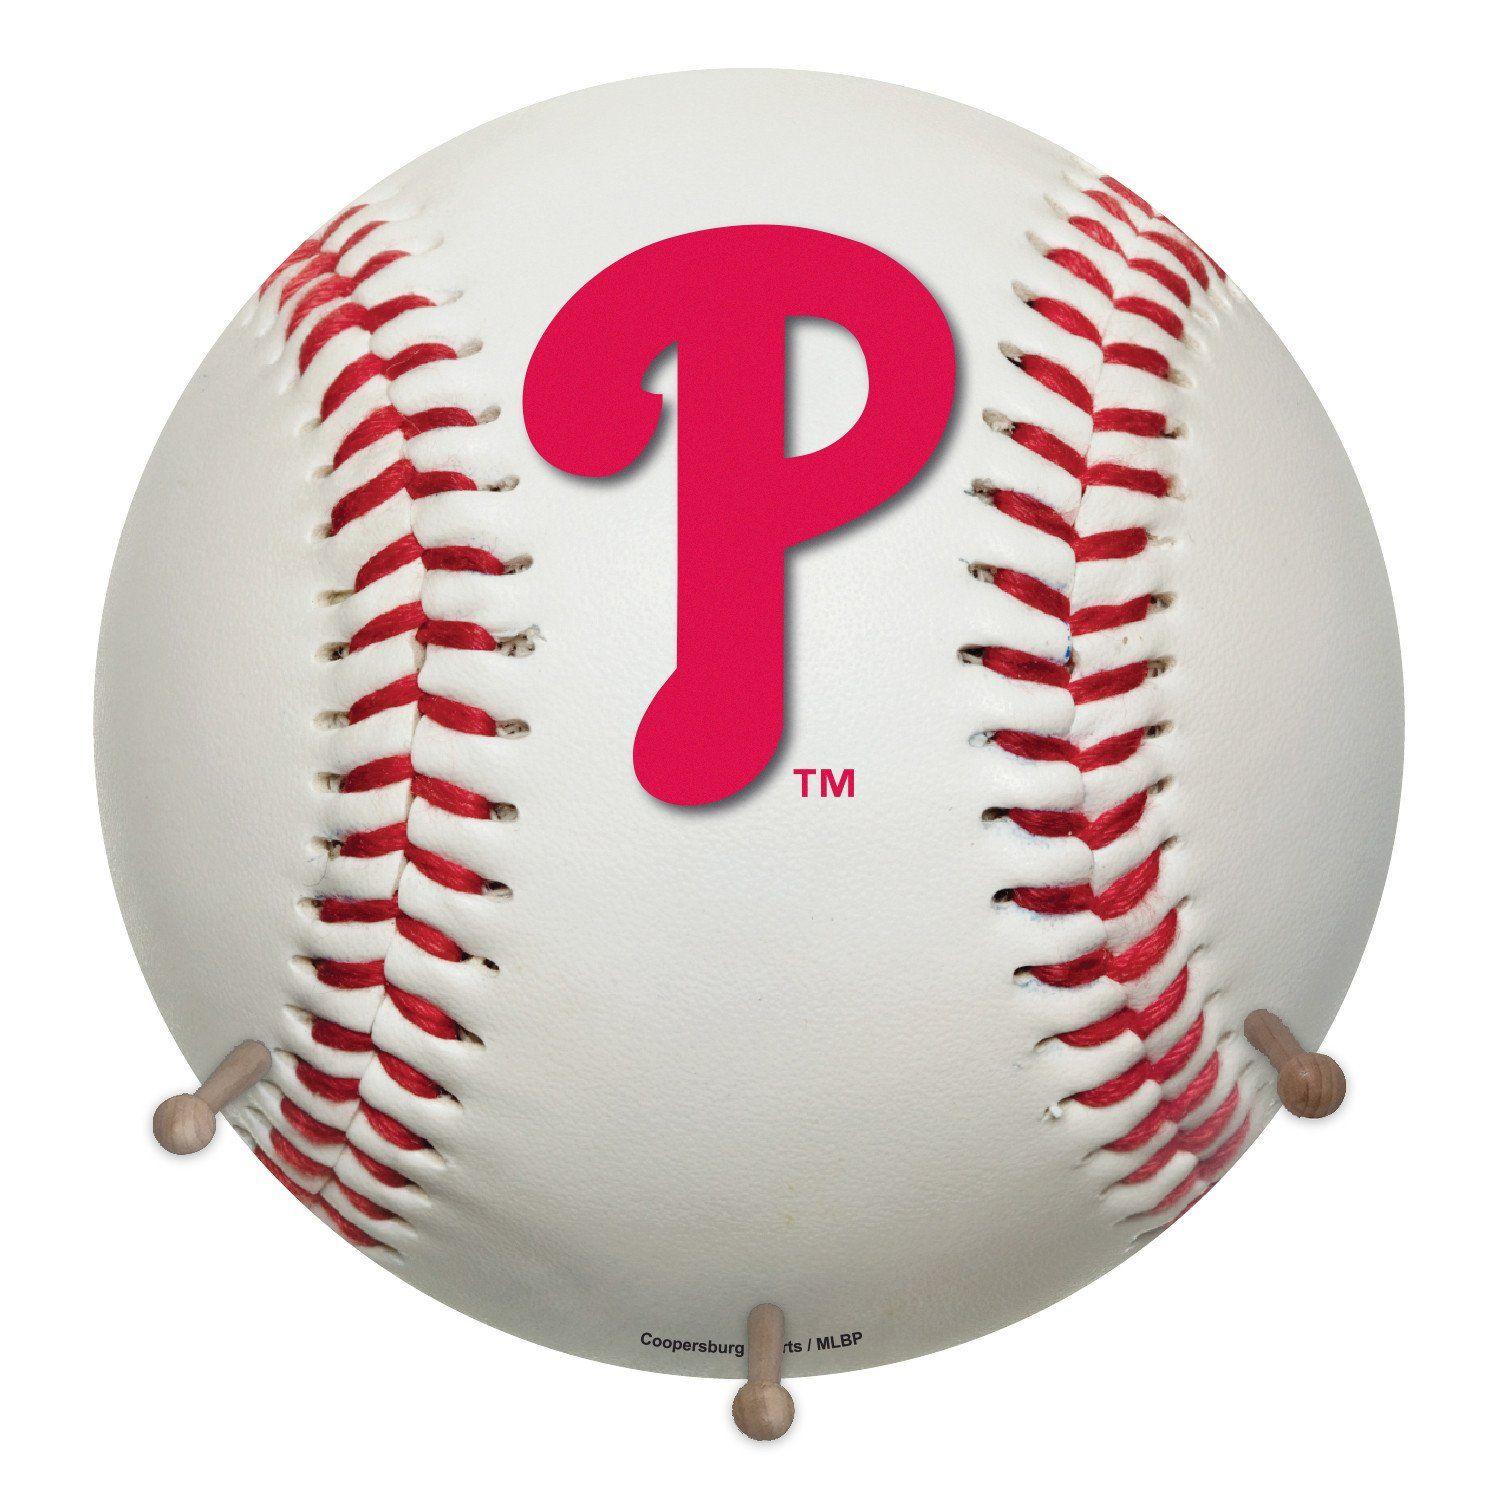 Philadelphia Phillies Team Logo - Philadelphia Phillies Baseball Coat Rack Team Logo | coopersburg